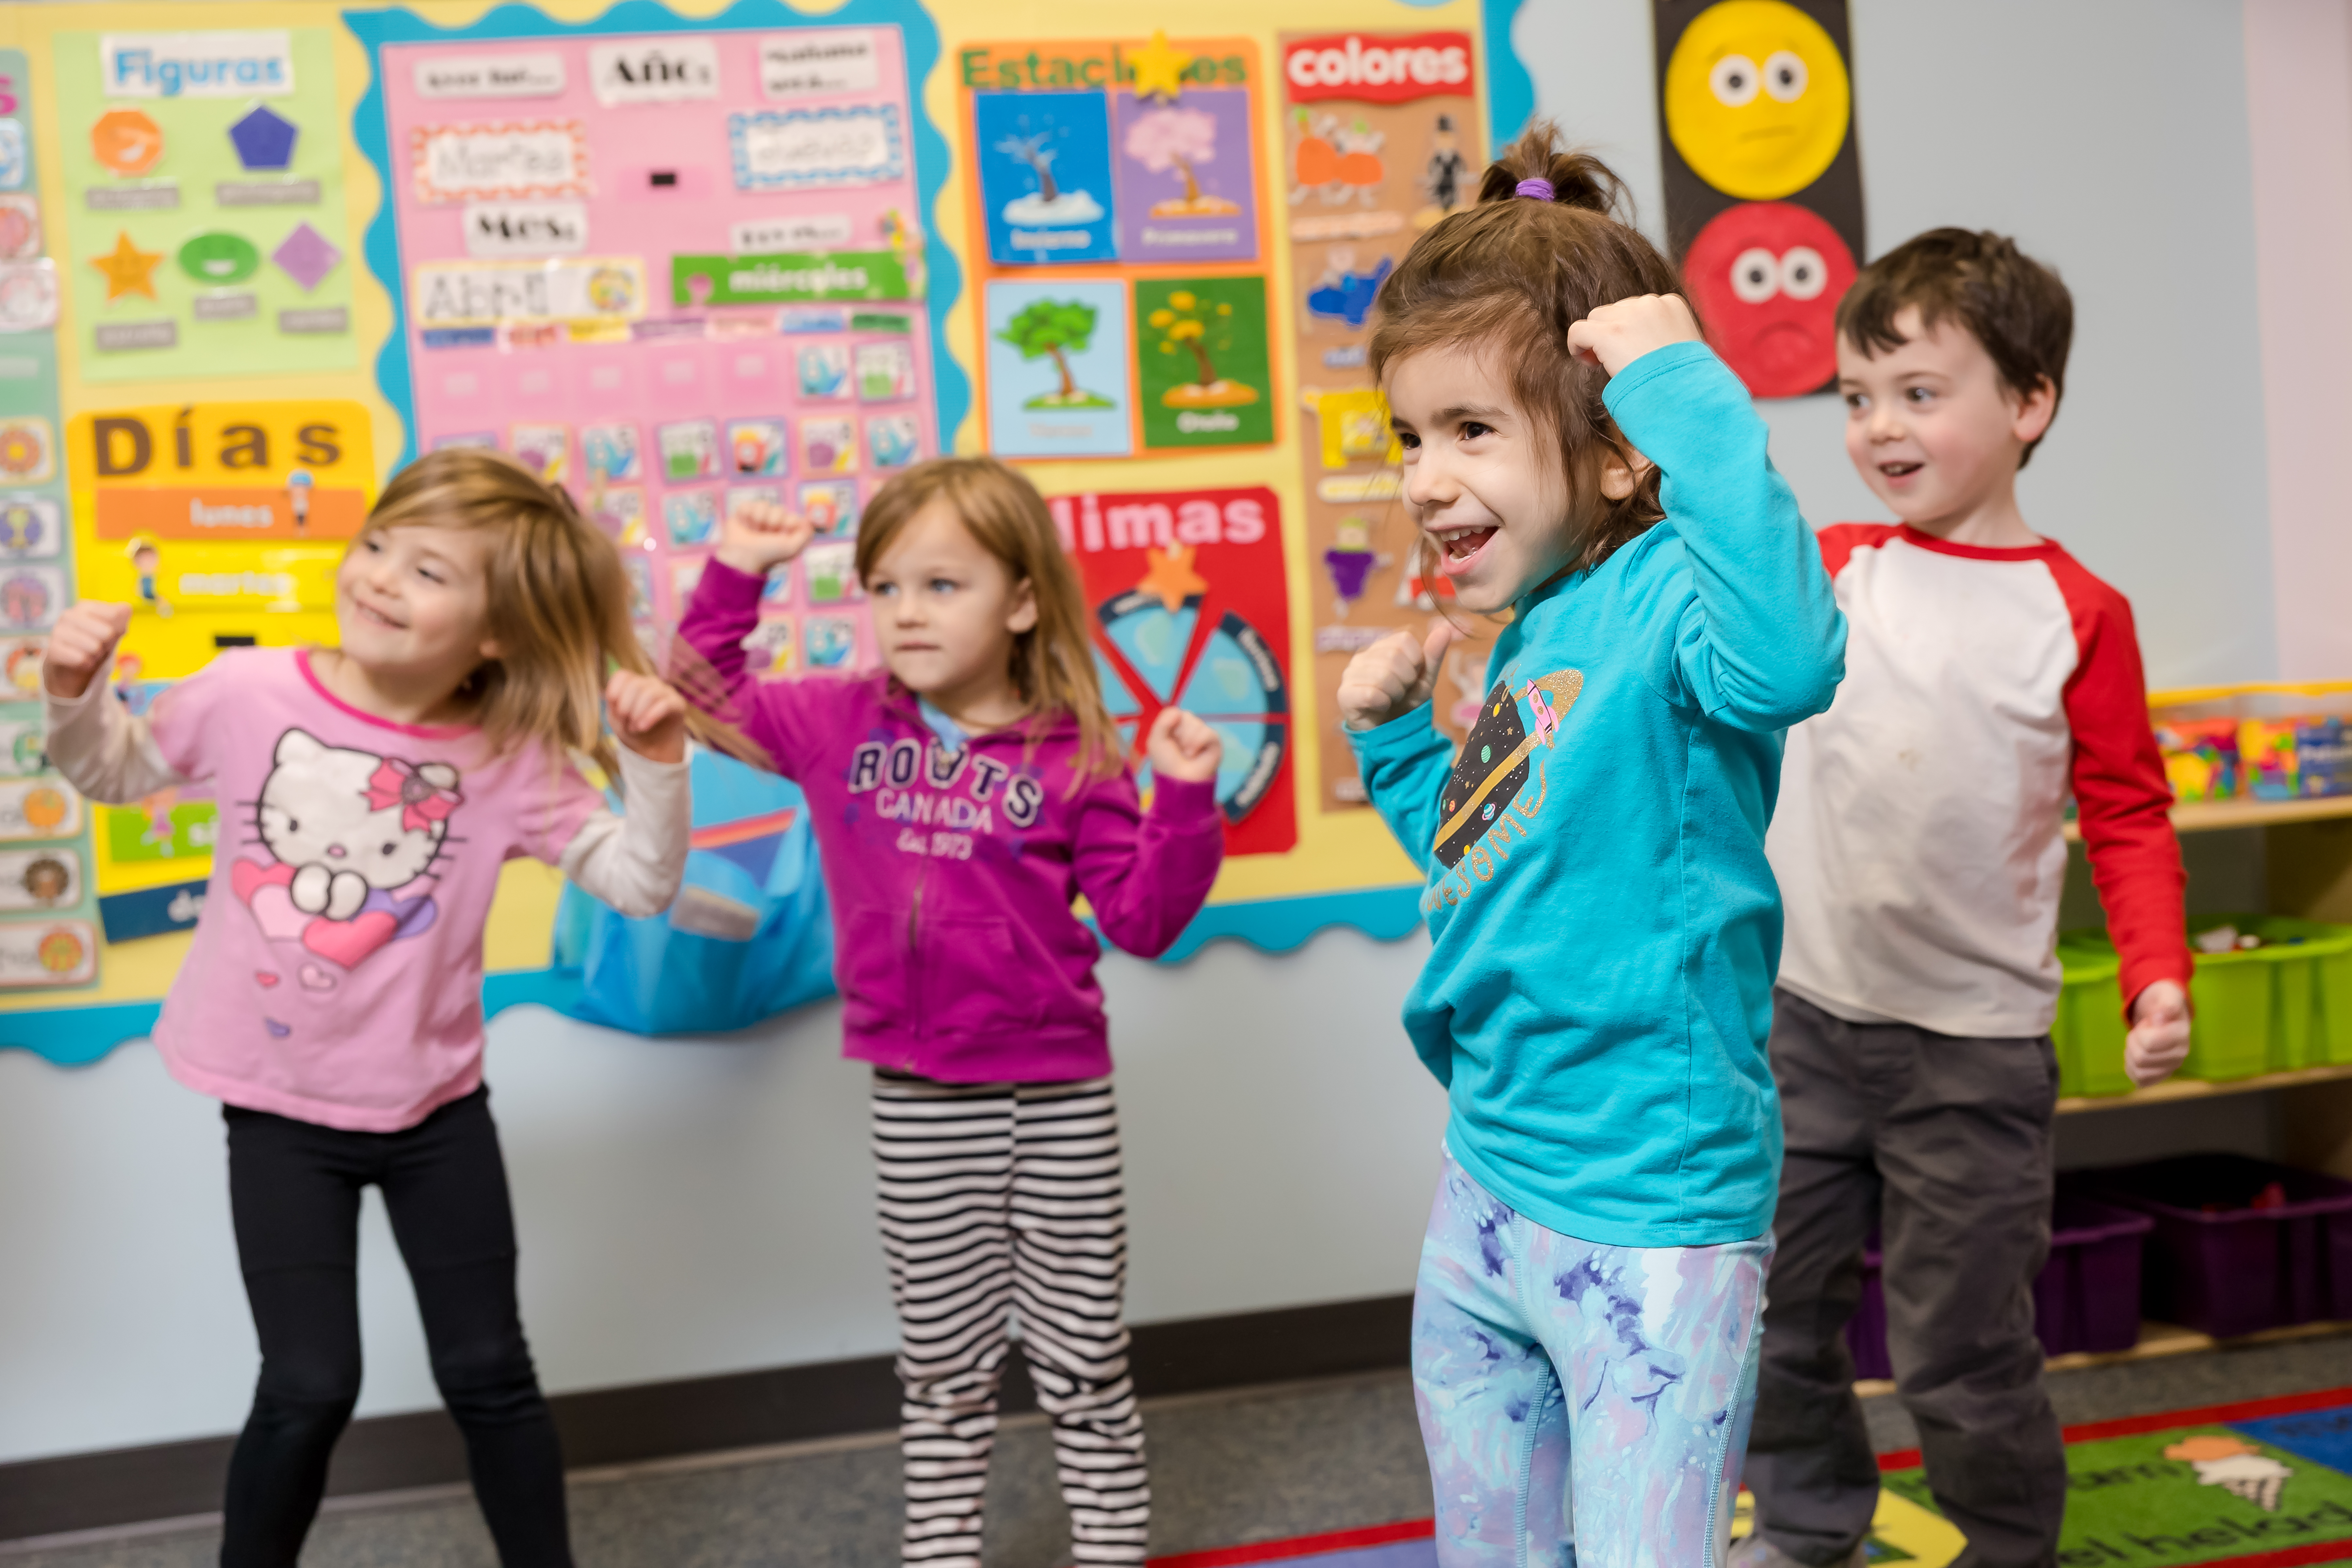 Preschool kids dancing to music